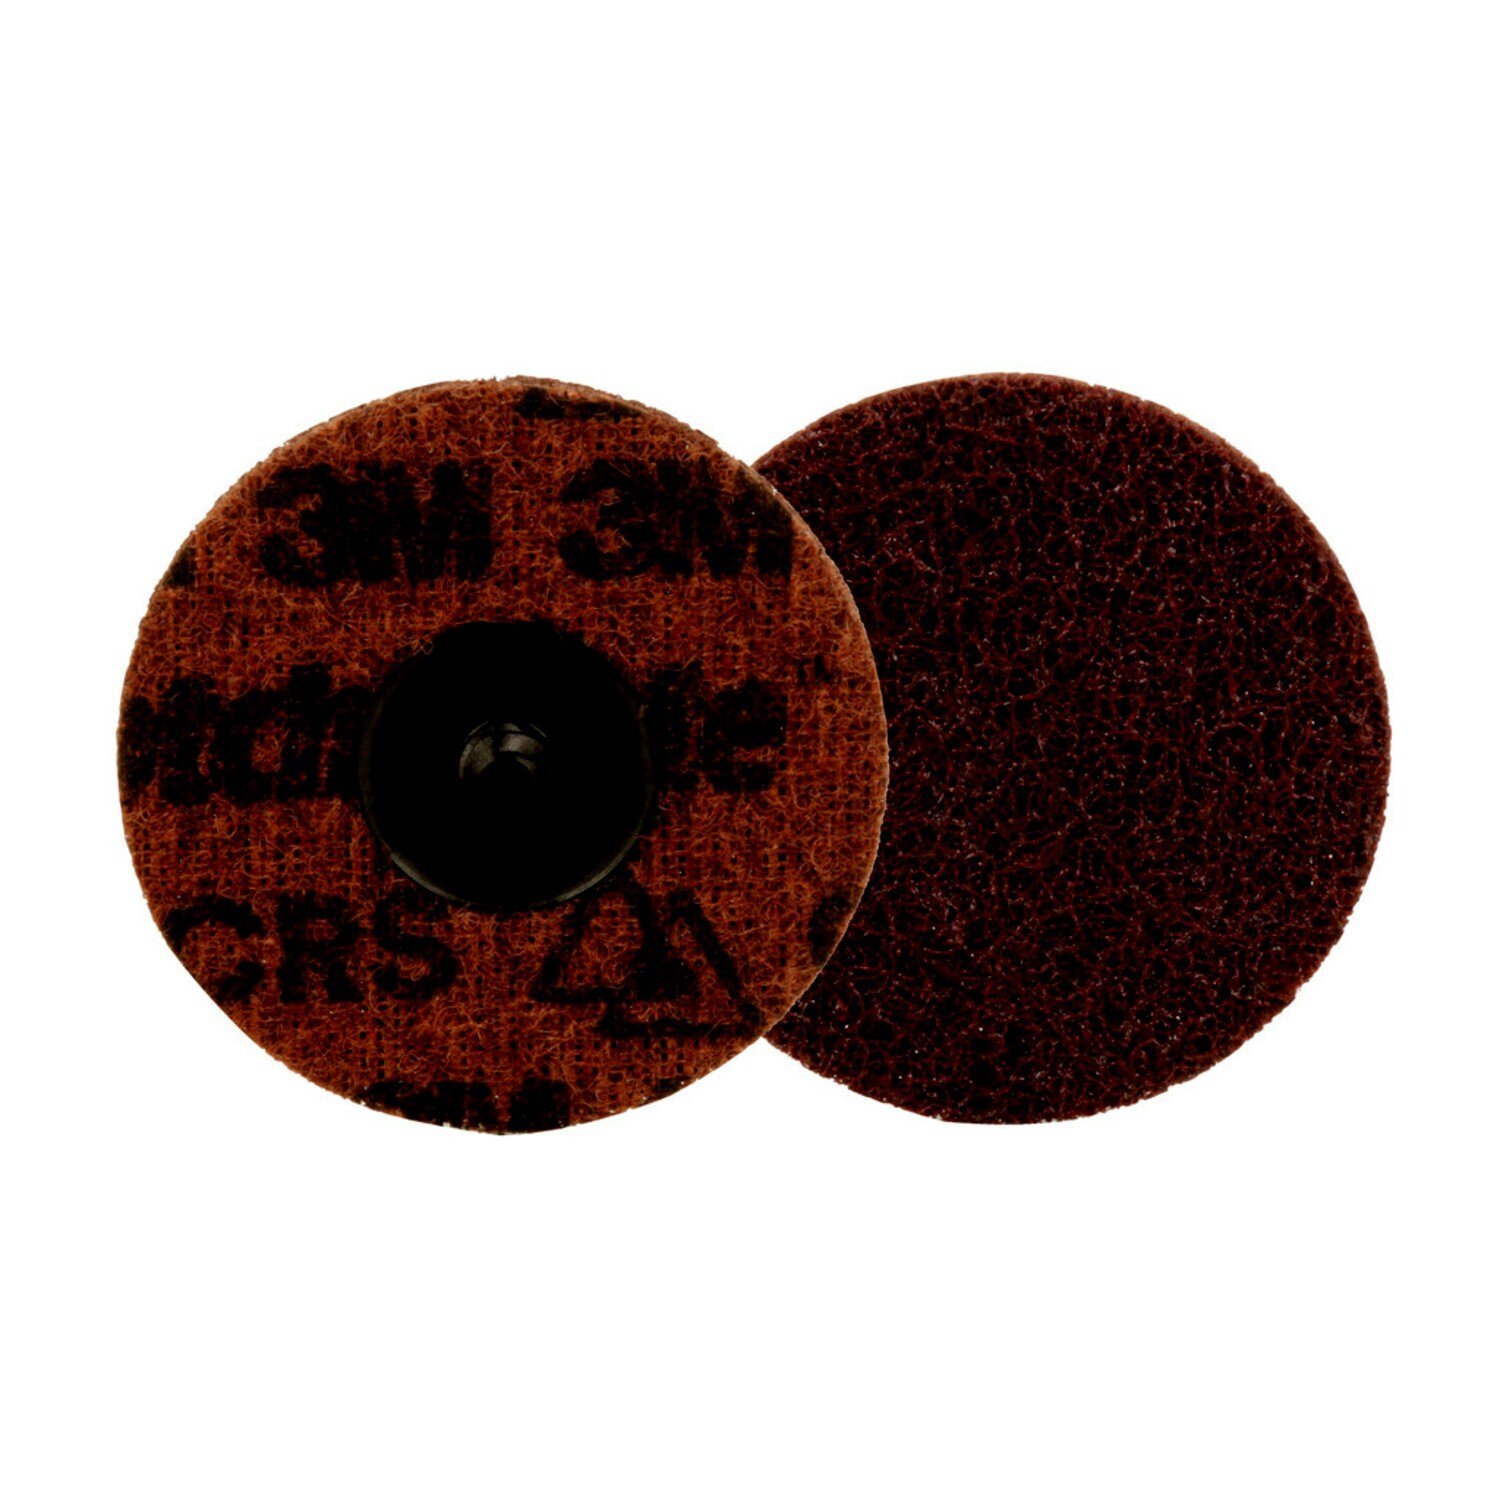 7100264197 - Scotch-Brite Roloc Precision Surface Conditioning Disc, PN-DR, Coarse,
TR, 3 in, 25/Carton, 100 ea/Case, Dispenser Pack